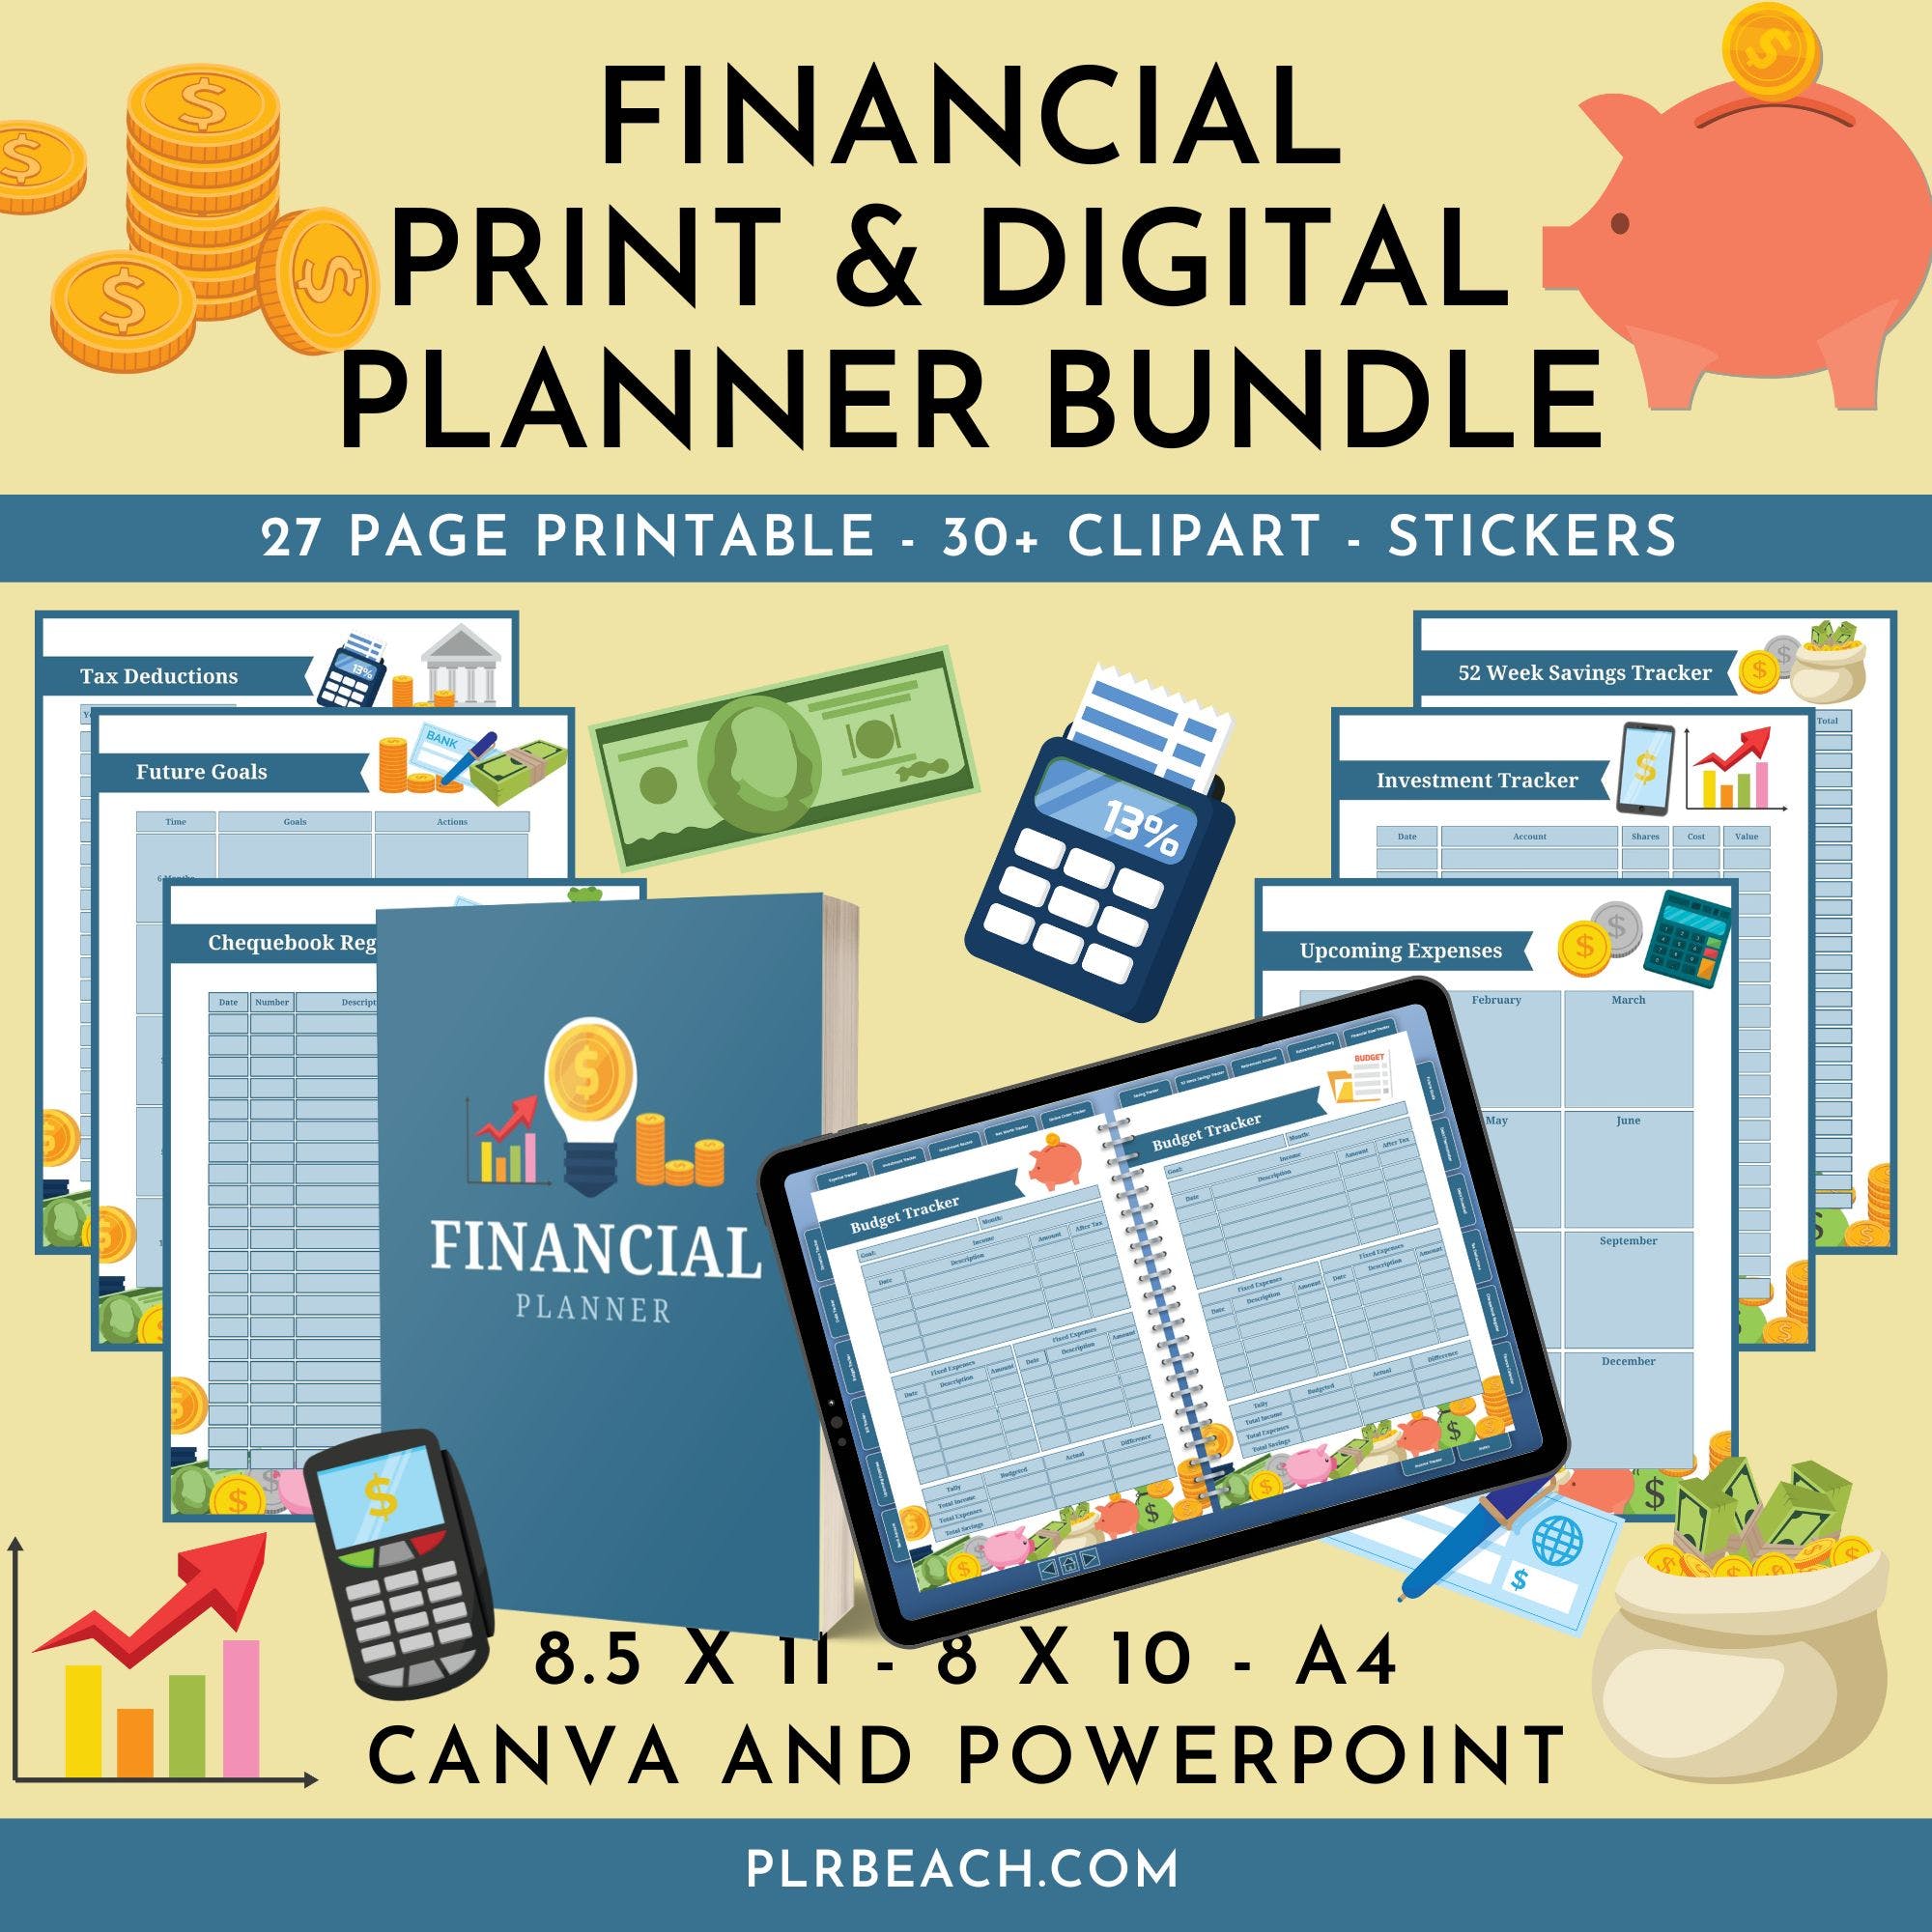 Fabulous Financial Print and Digital Planner Bundle!